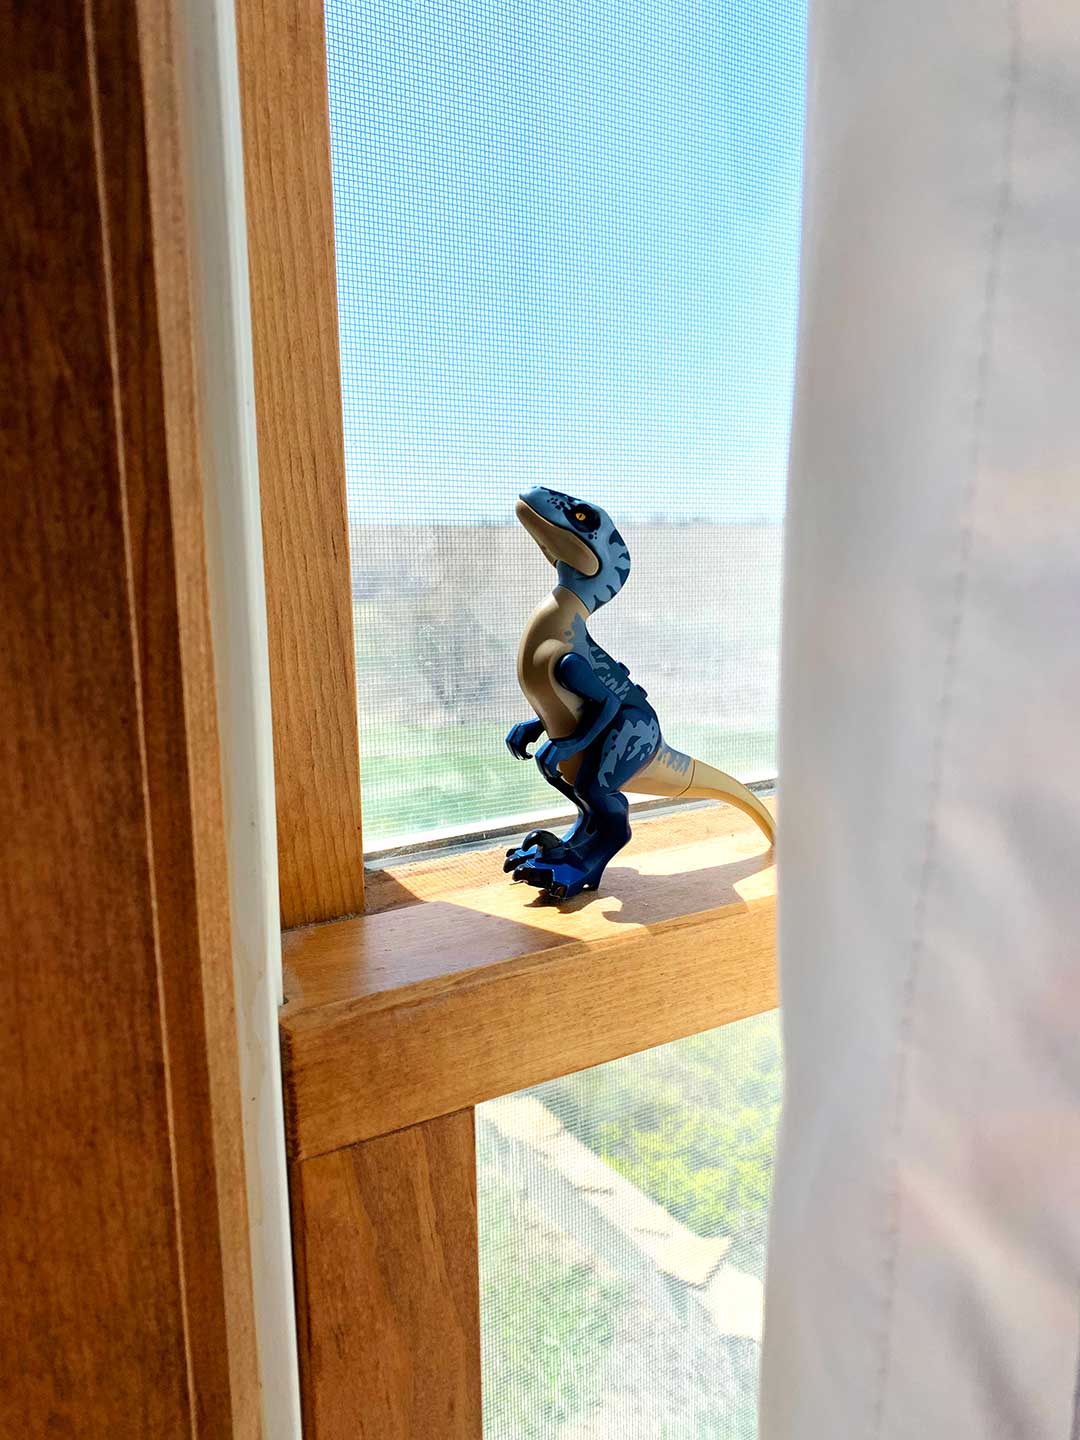 A toy dinosaur sitting on the windowsill in the sunshine.